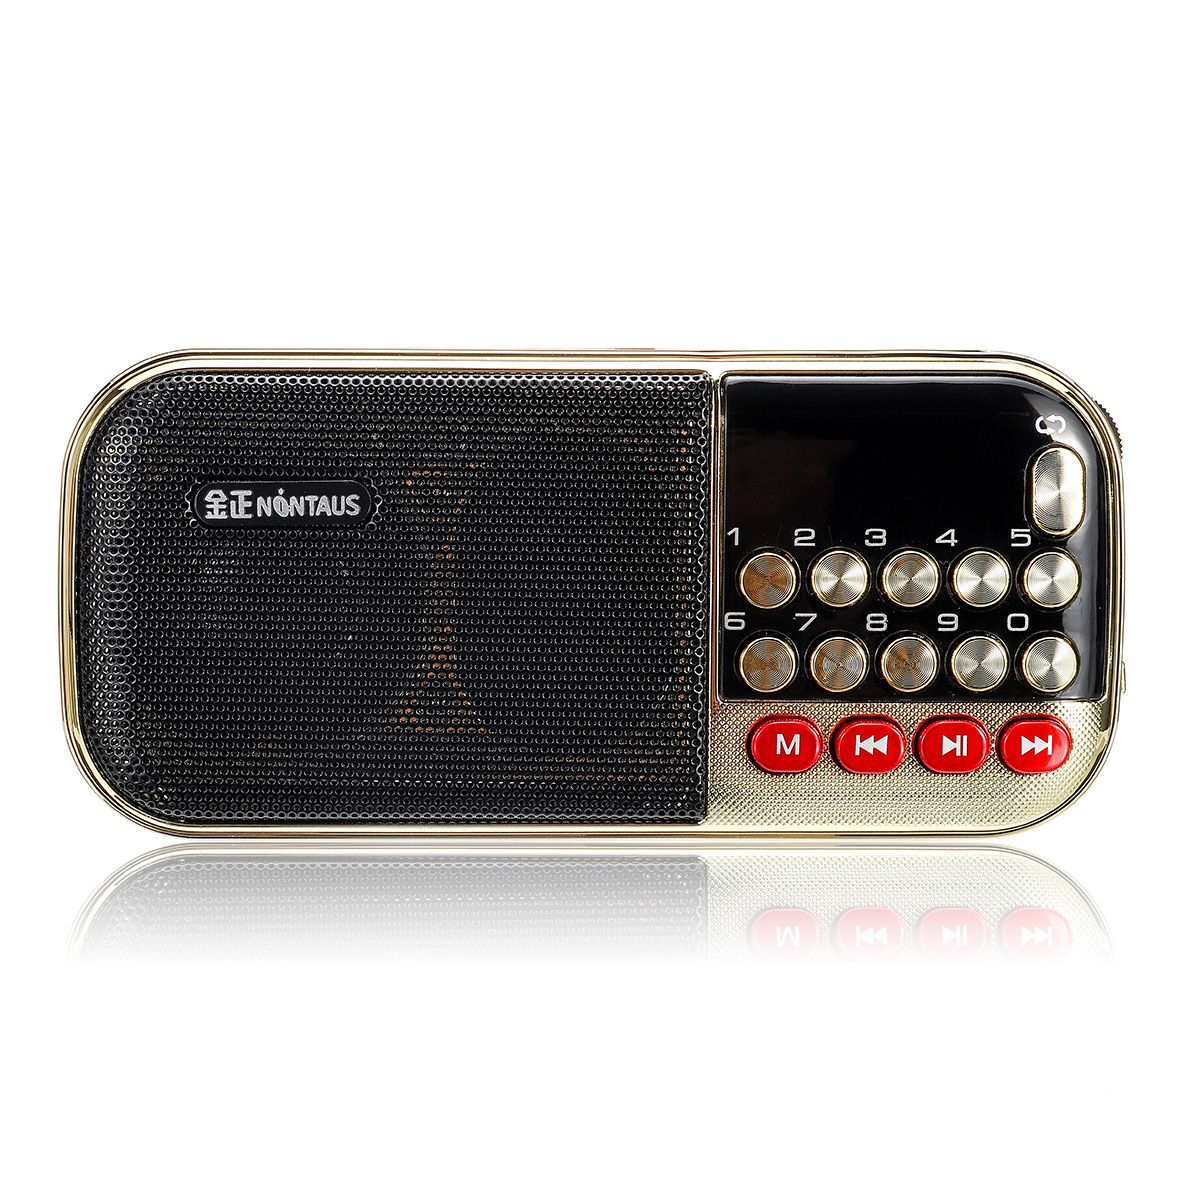 Portable-FM-875-108MHZ-85dB-Radio-MP3-Player-Stereo-Speaker-1517983